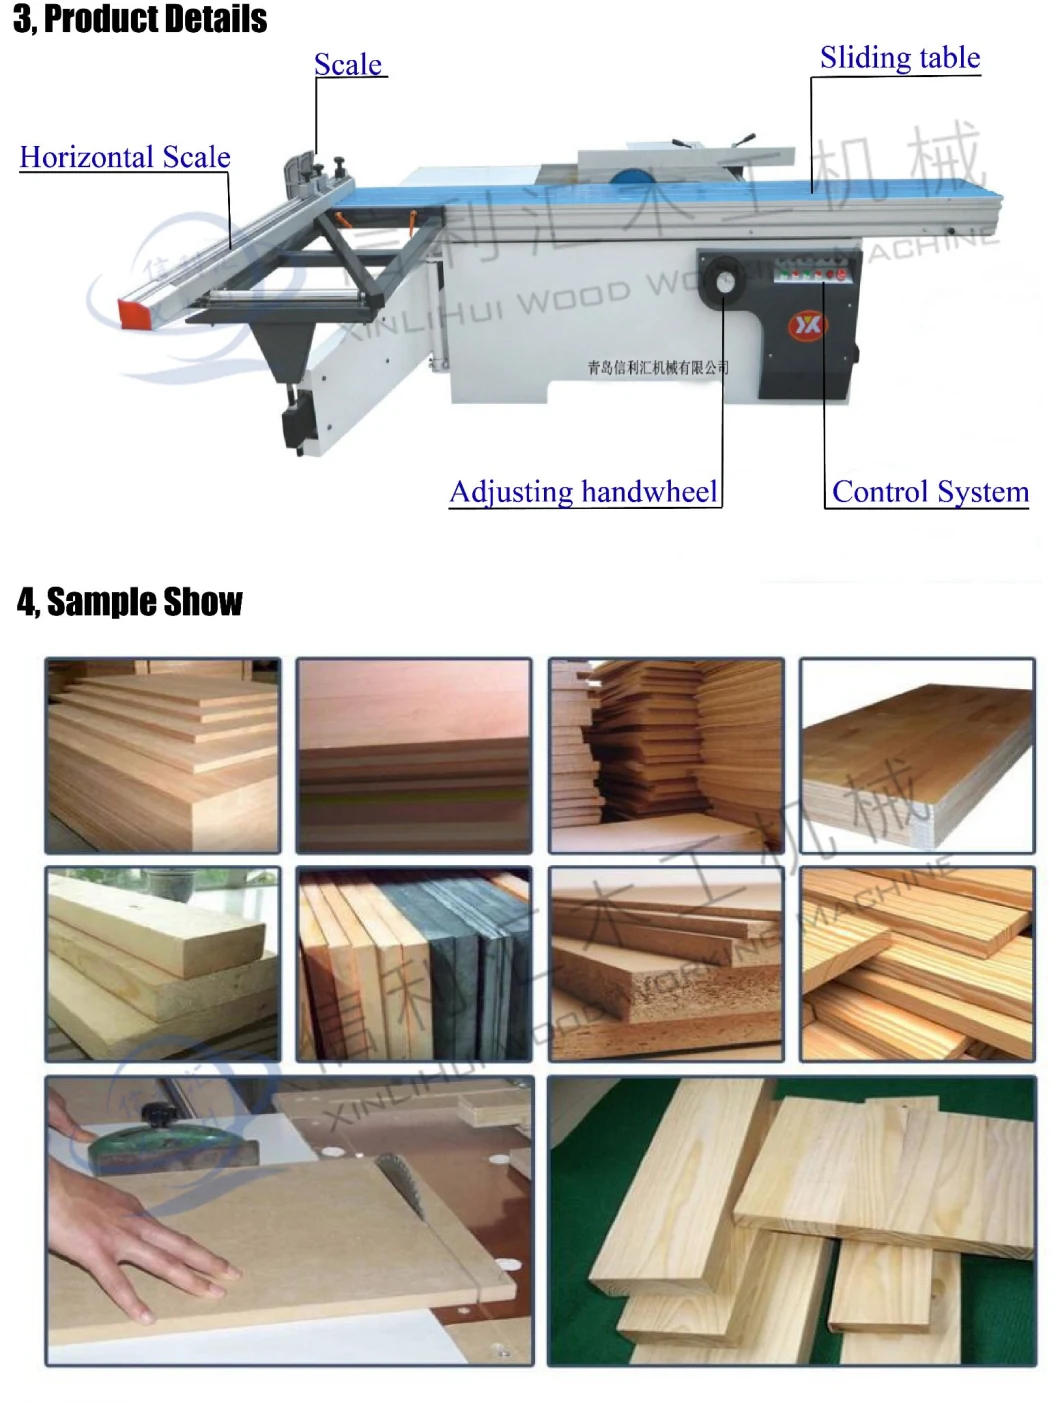 Woodworking Machinery, Wood Cutting Machines, Multifunctional Wood Chip Cutting Machine, Wood Cutting Machine, CNC Router Cutting Machines in Wood in China